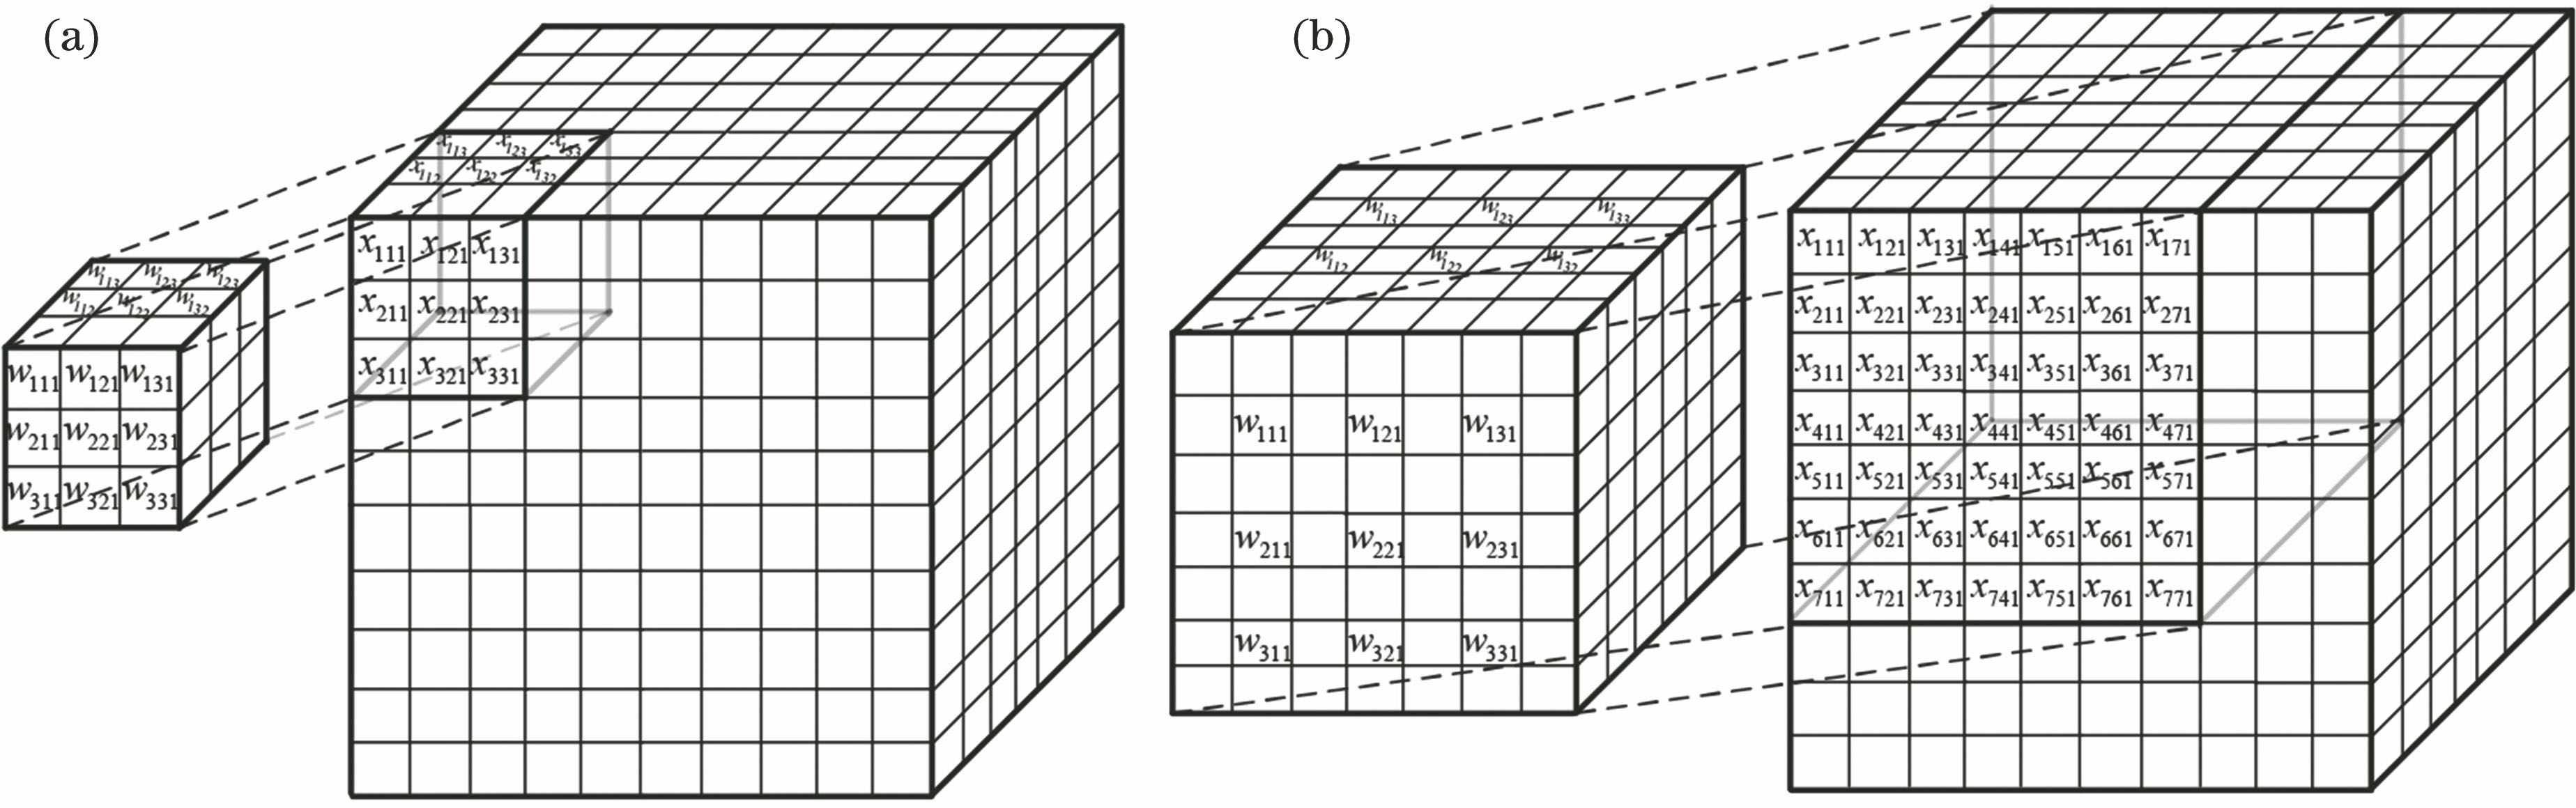 Dot product operation diagram of 3D convolution with input voxel block. (a) Original 3D convolution operation; (b) 2-dilated 3D convolution operation